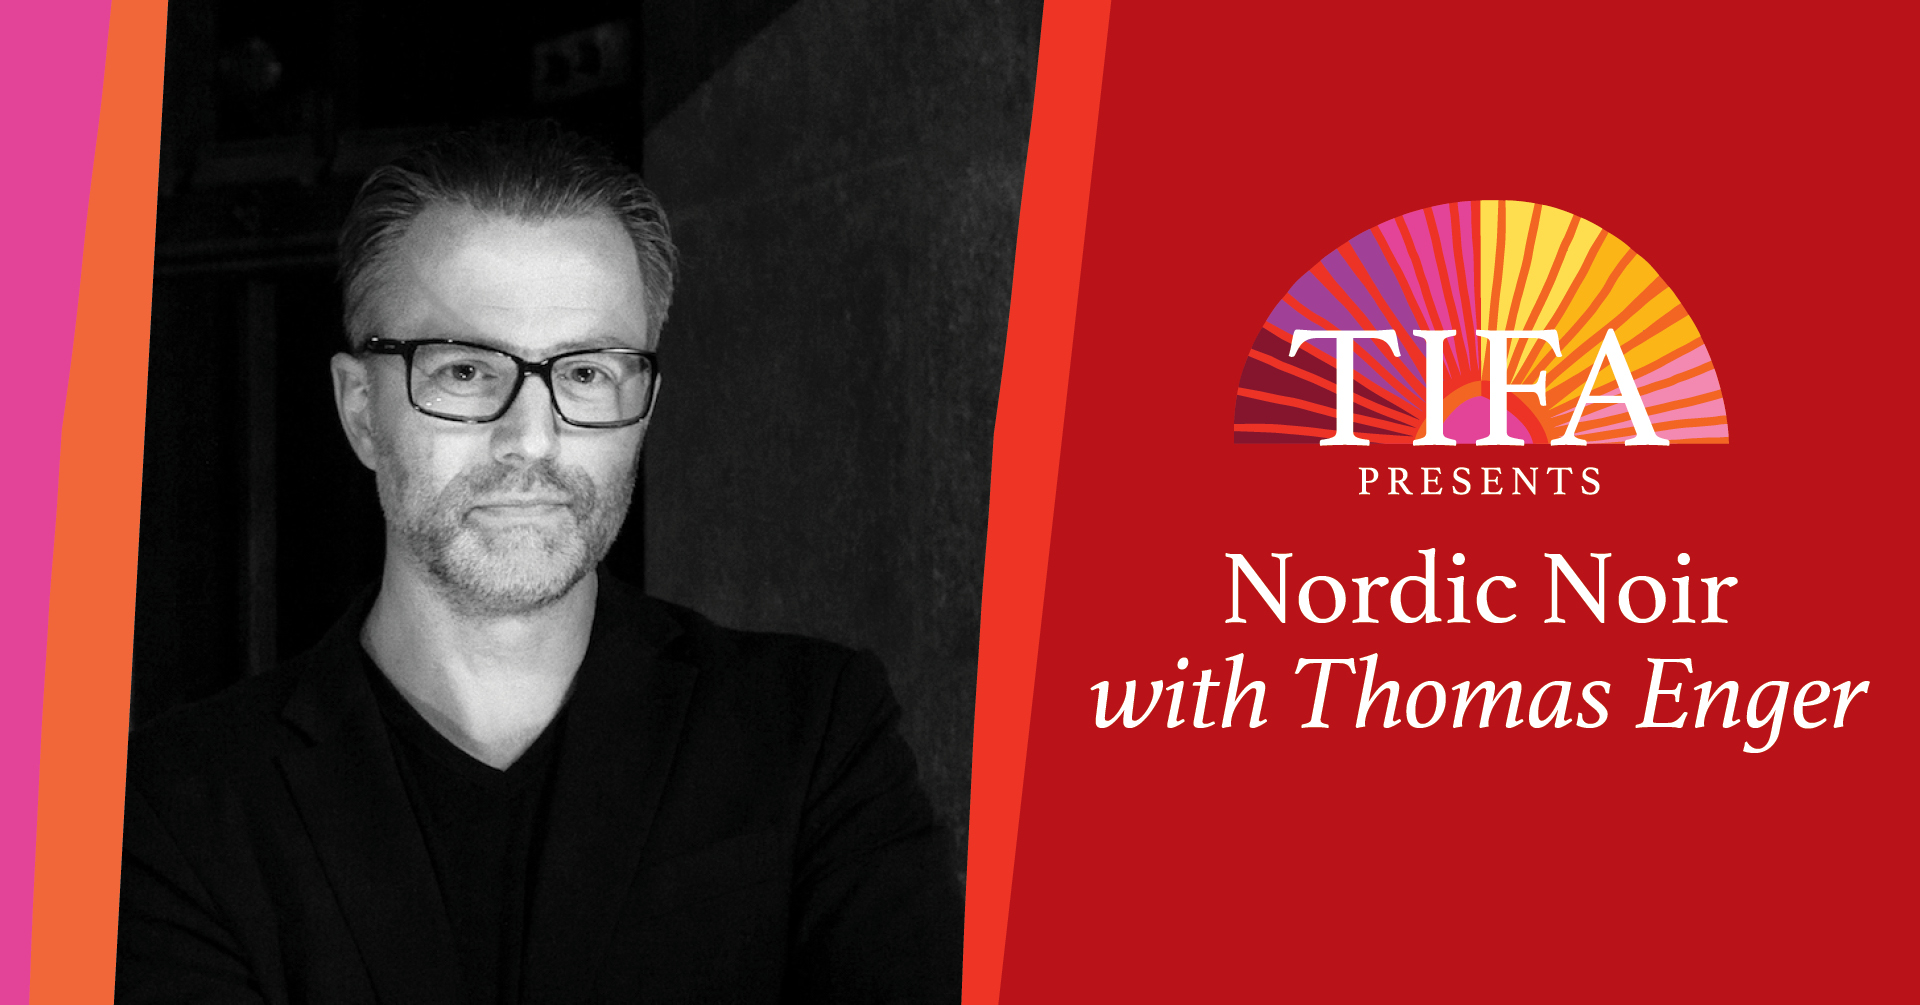 Headshot of Thomas Enger with "TIFA Presents Nordic Noir with Thomas Enger"